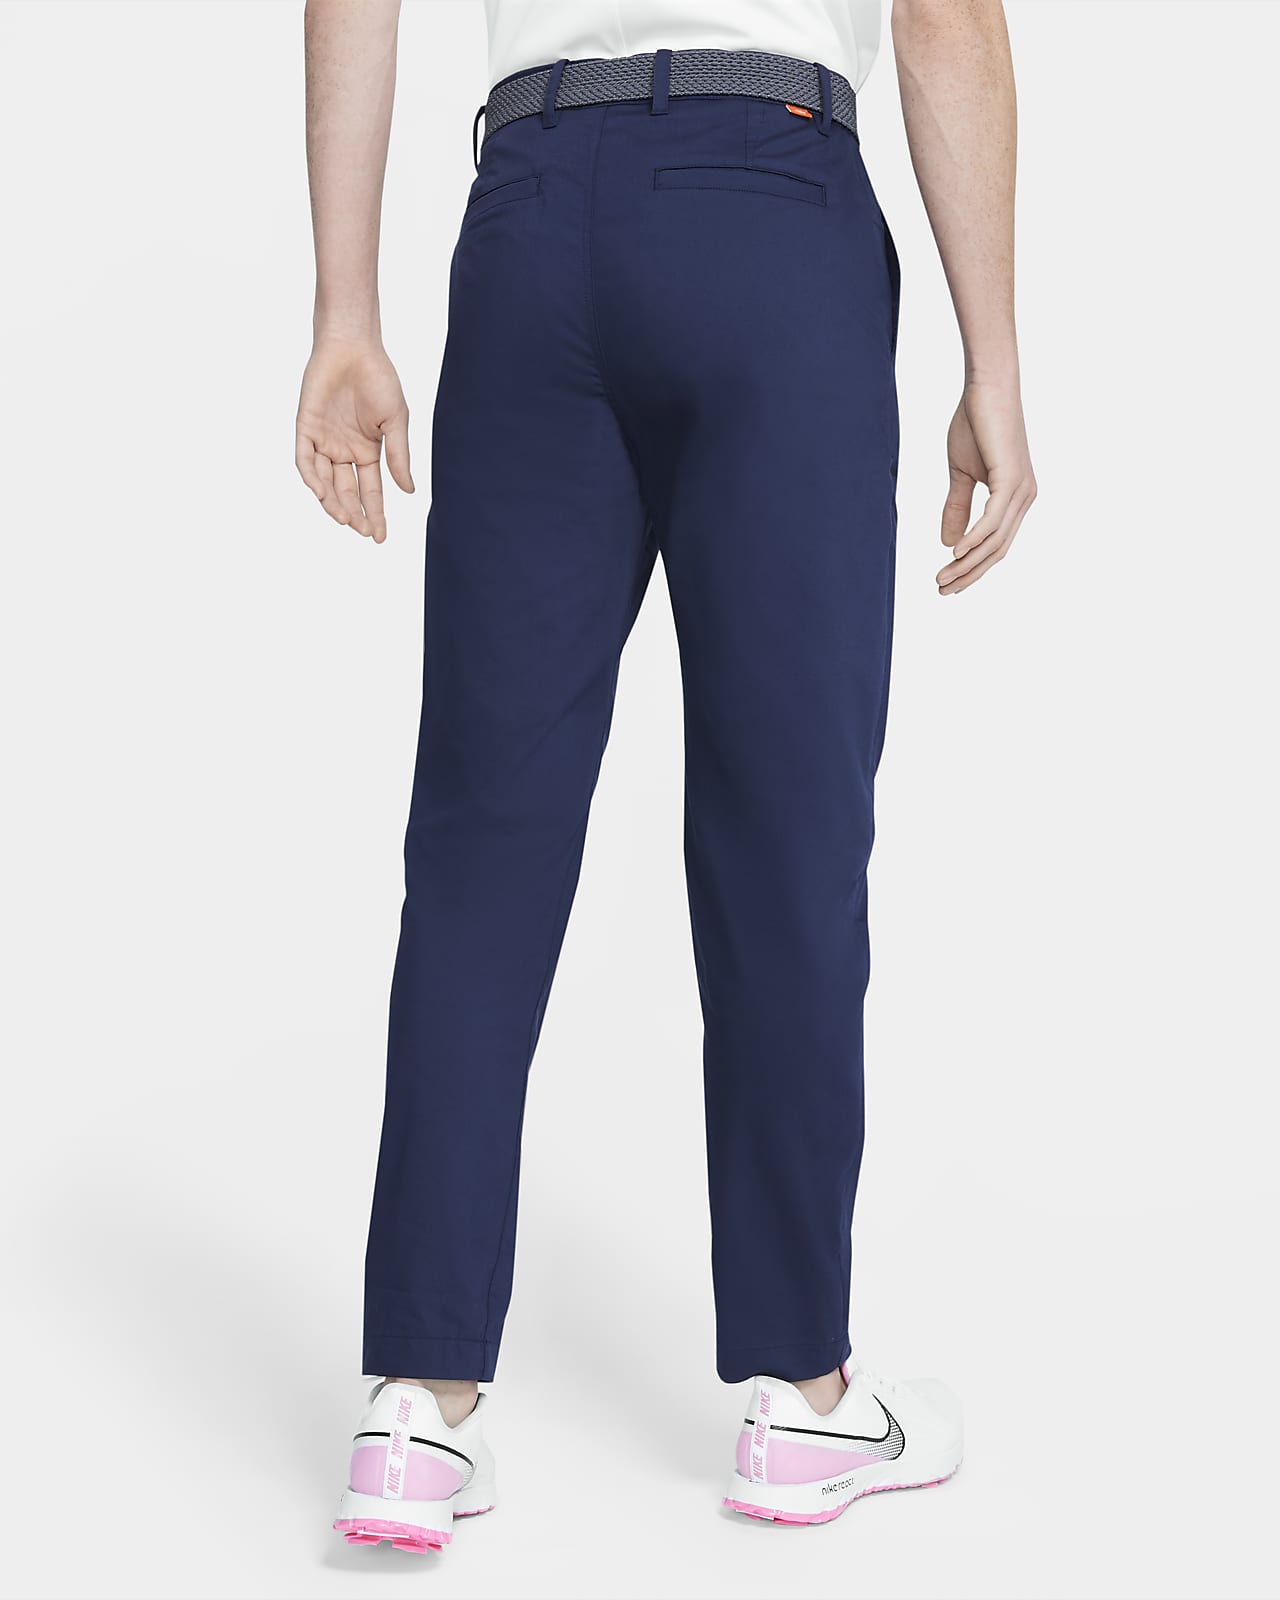 Pantalones chinos de golf de ajuste estándar para Dri-FIT UV.